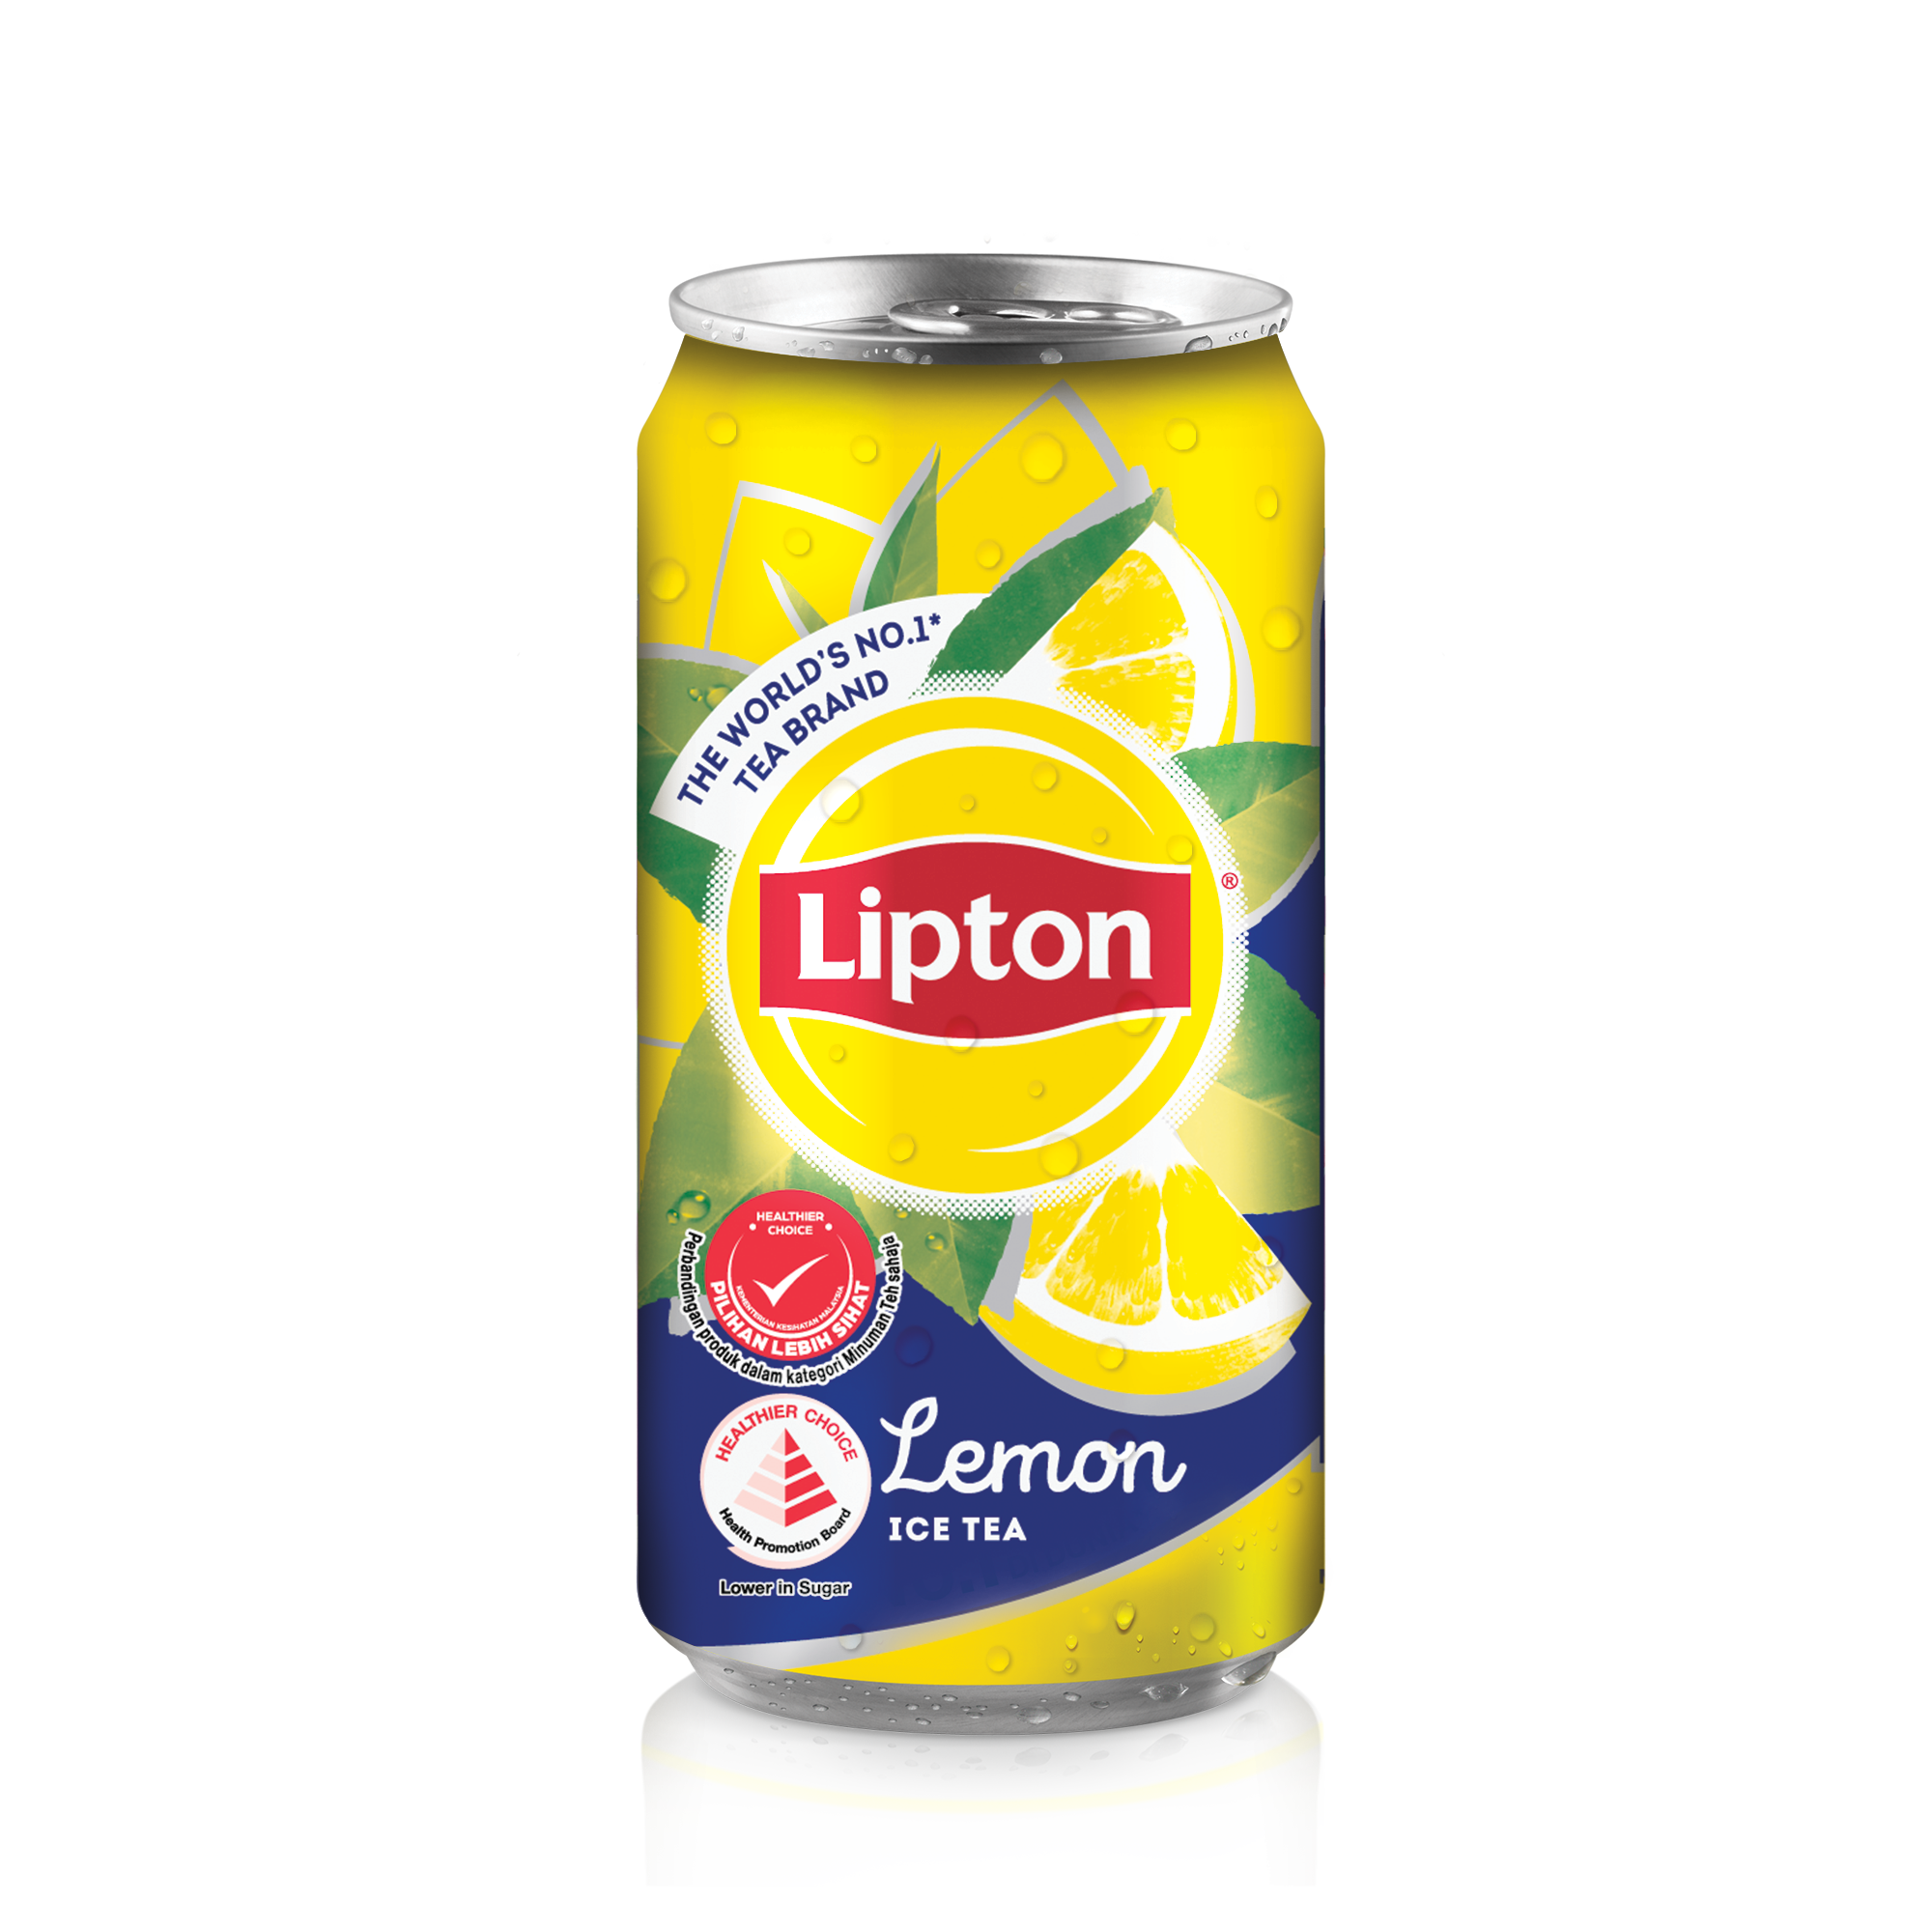 Картинки липтона. Липтон айс ти 0,6. Липтон 0.25. Липтон 0,5 лимон. Пятерочка Lipton Ice Tea.